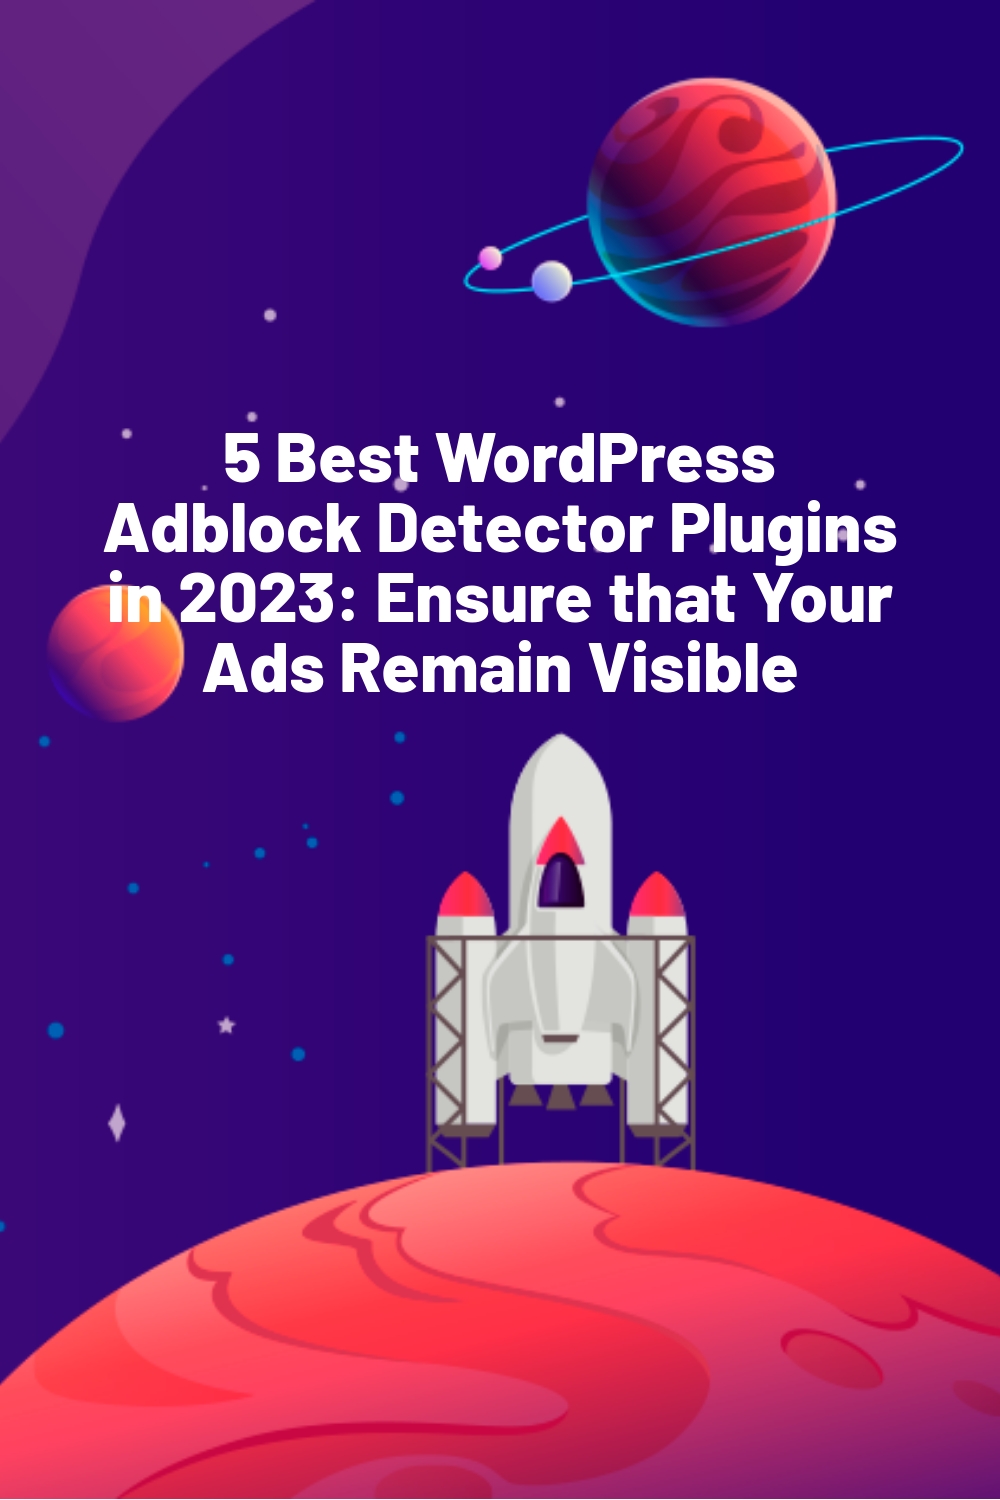 5 Best WordPress Adblock Detector Plugins in 2023: Ensure that Your Ads Remain Visible